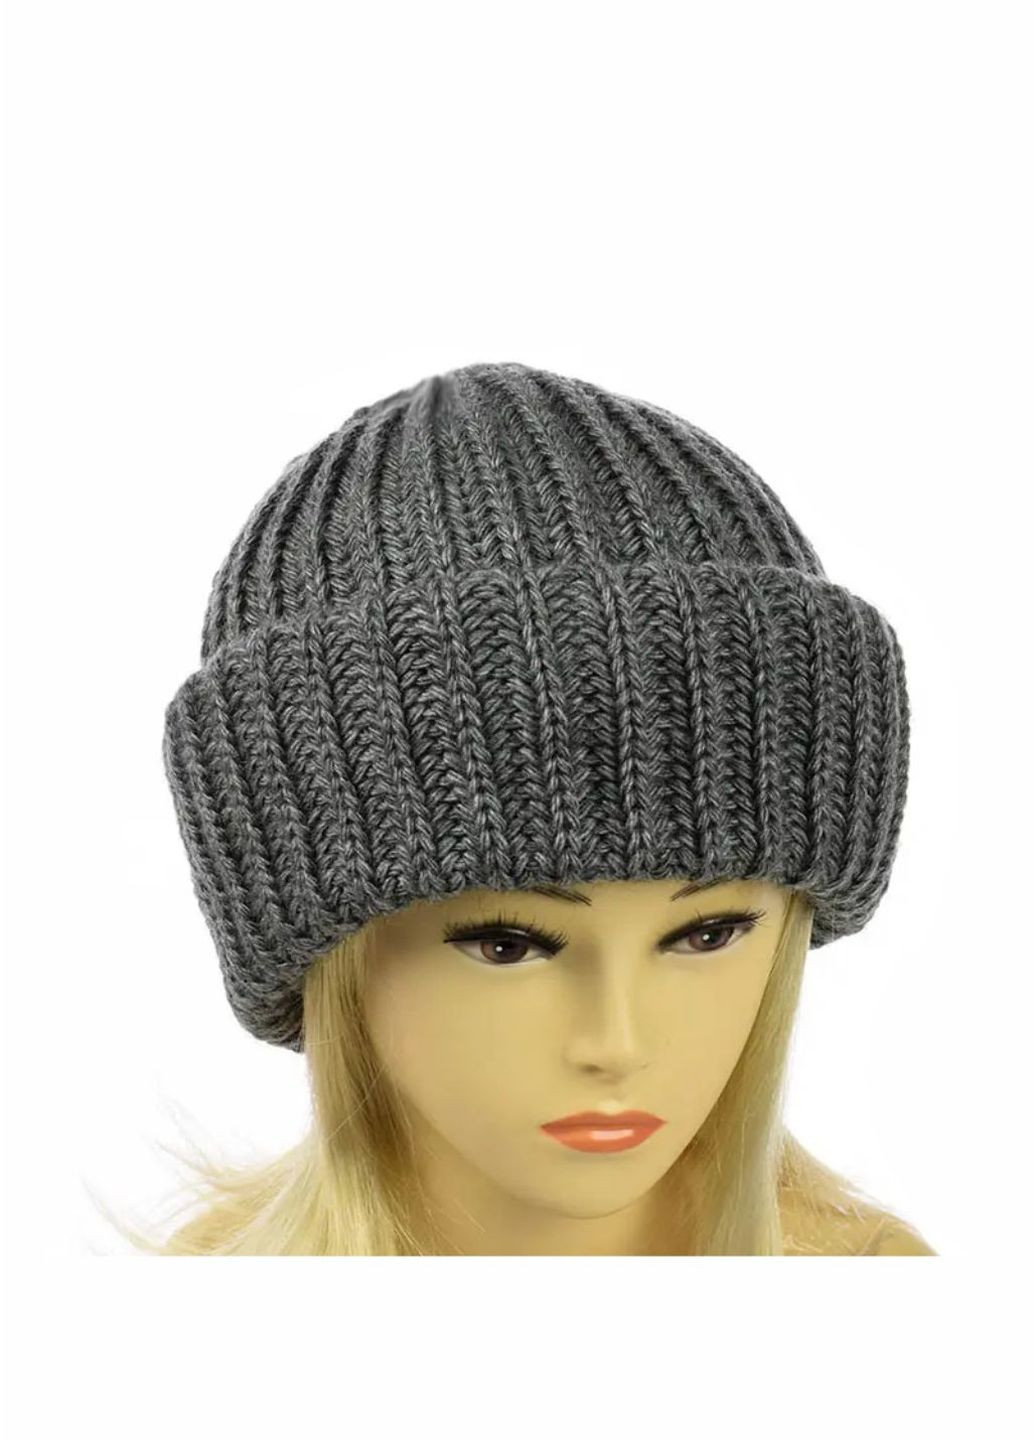 Женский зимний комплект Барбара шапка + хомут No Brand набор барбара (276260563)